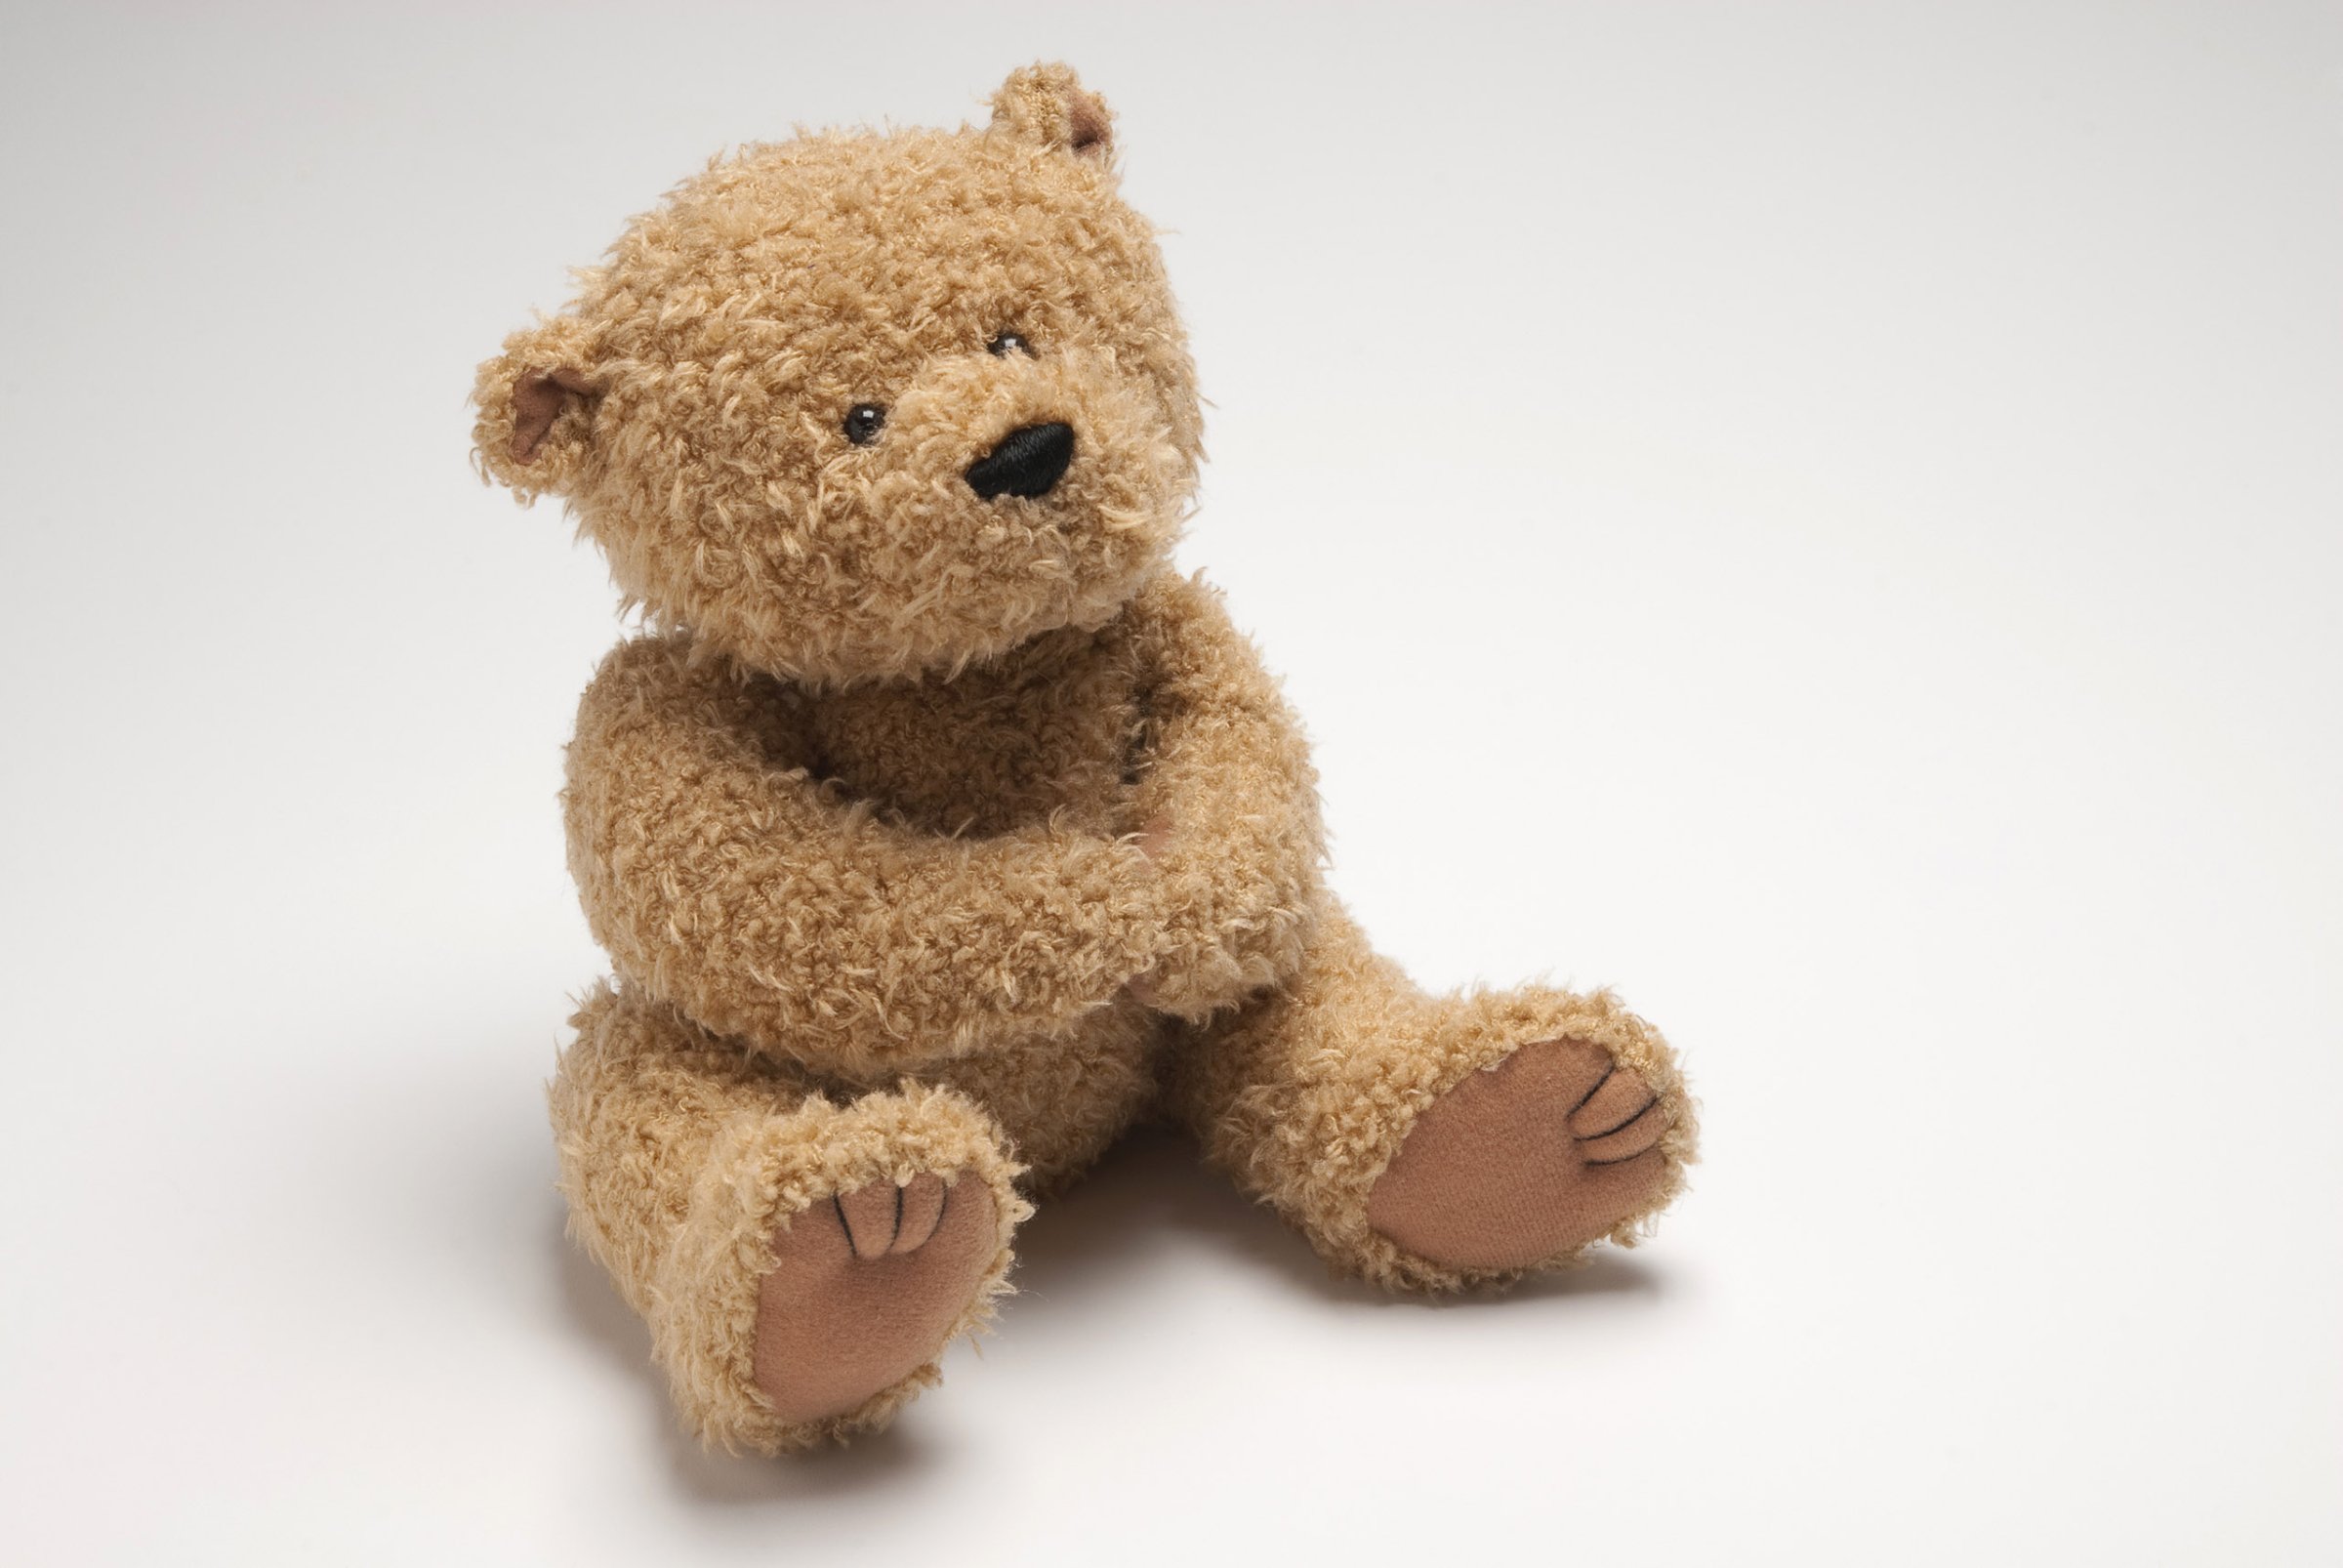 Light brown stuffed bear sitting on white surface